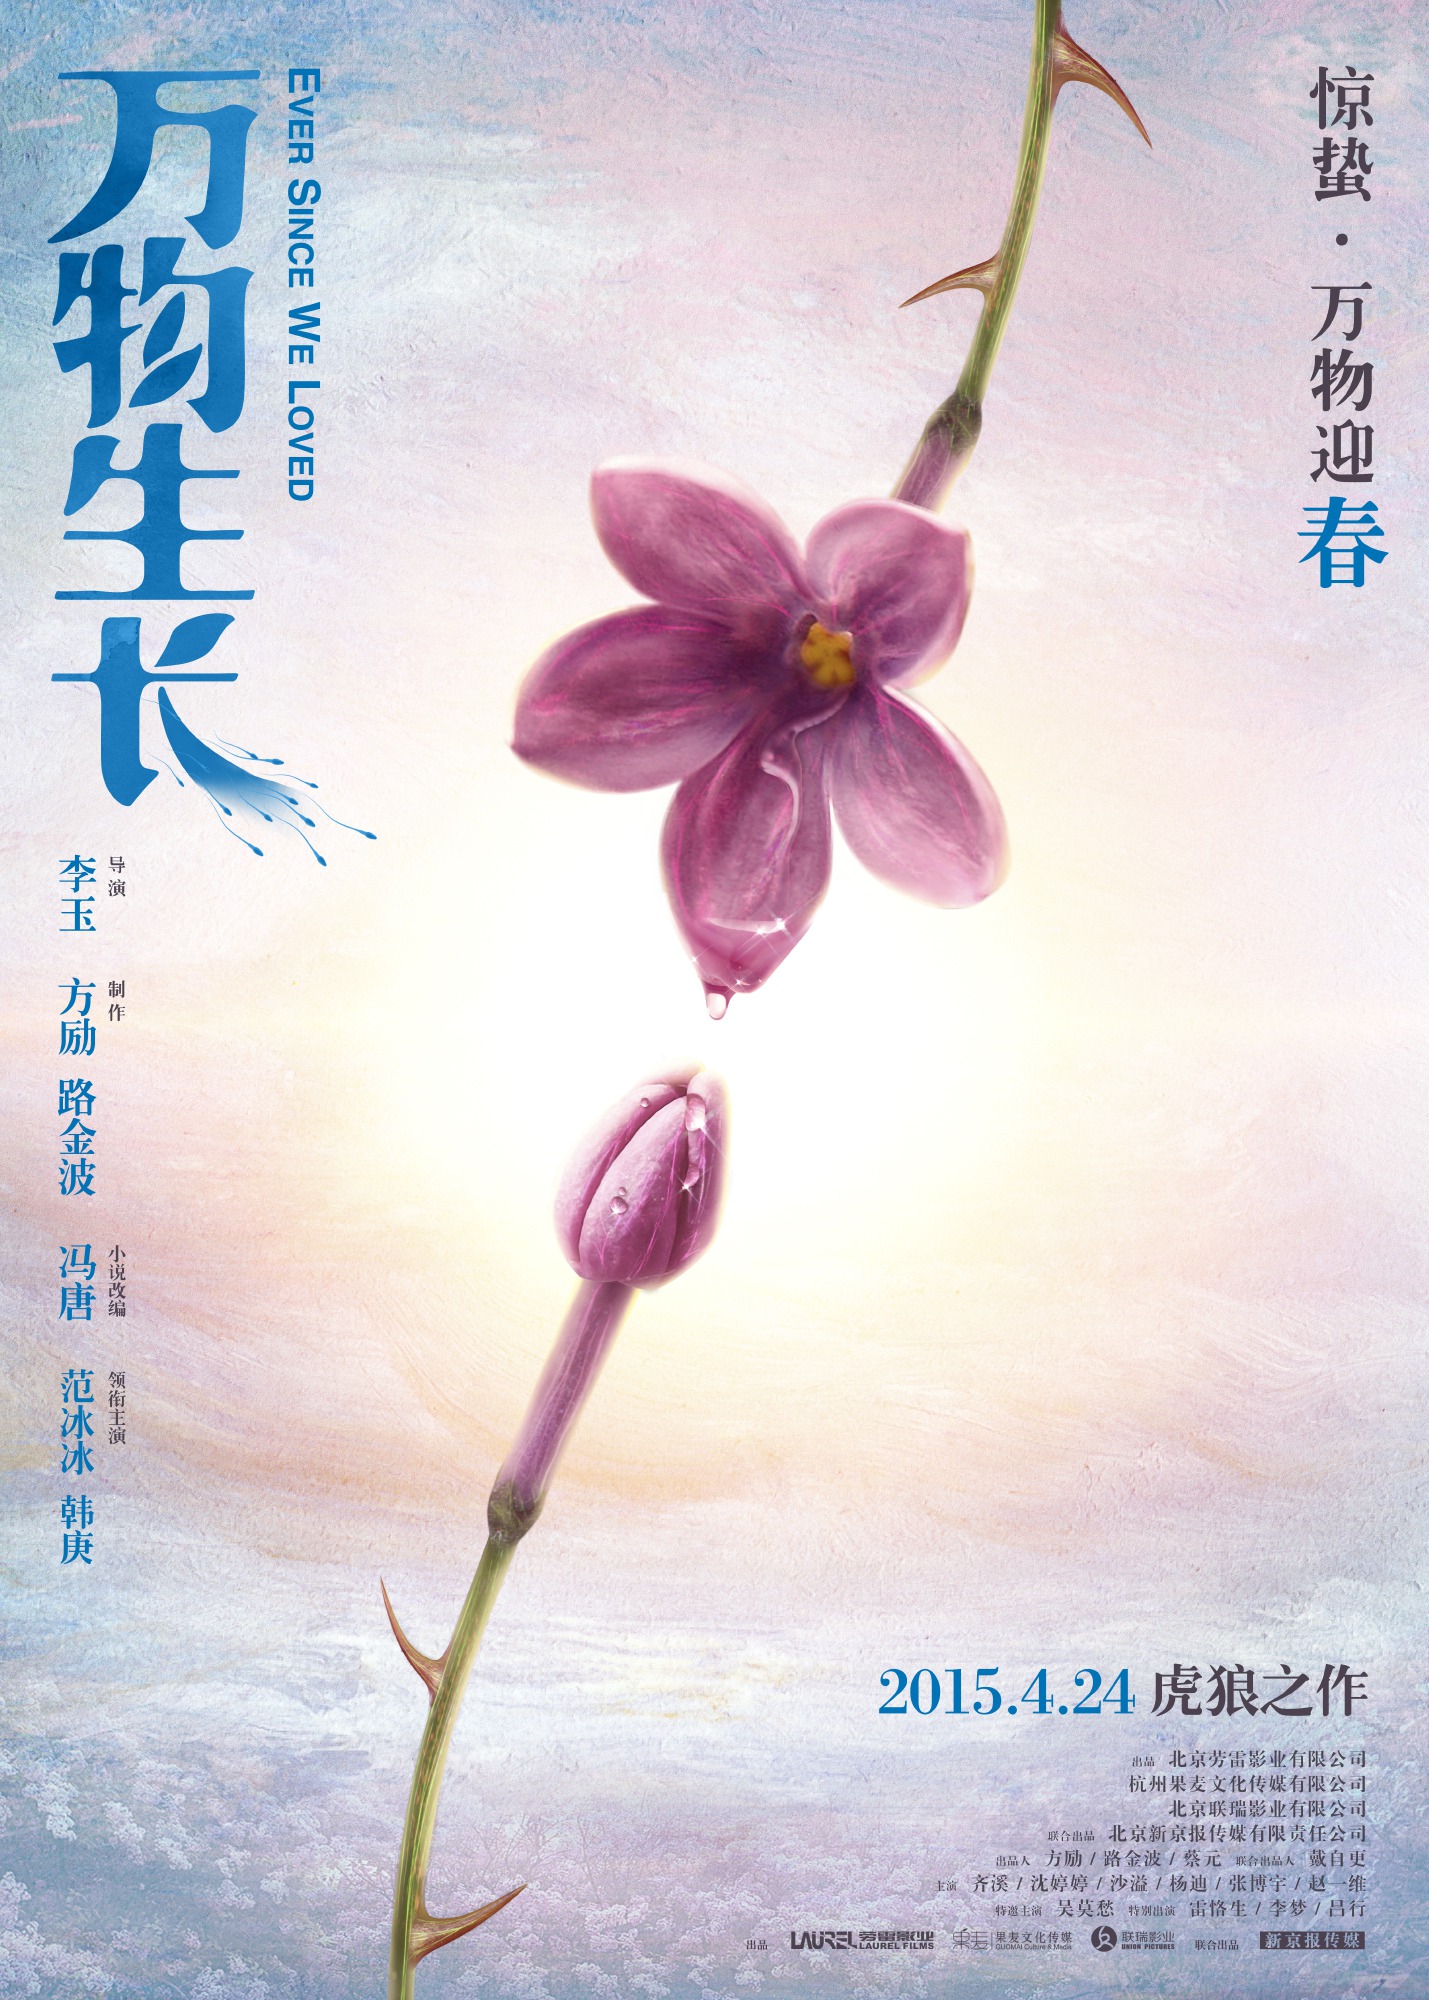 Mega Sized Movie Poster Image for Wan Wu Sheng Zhang (#4 of 4)